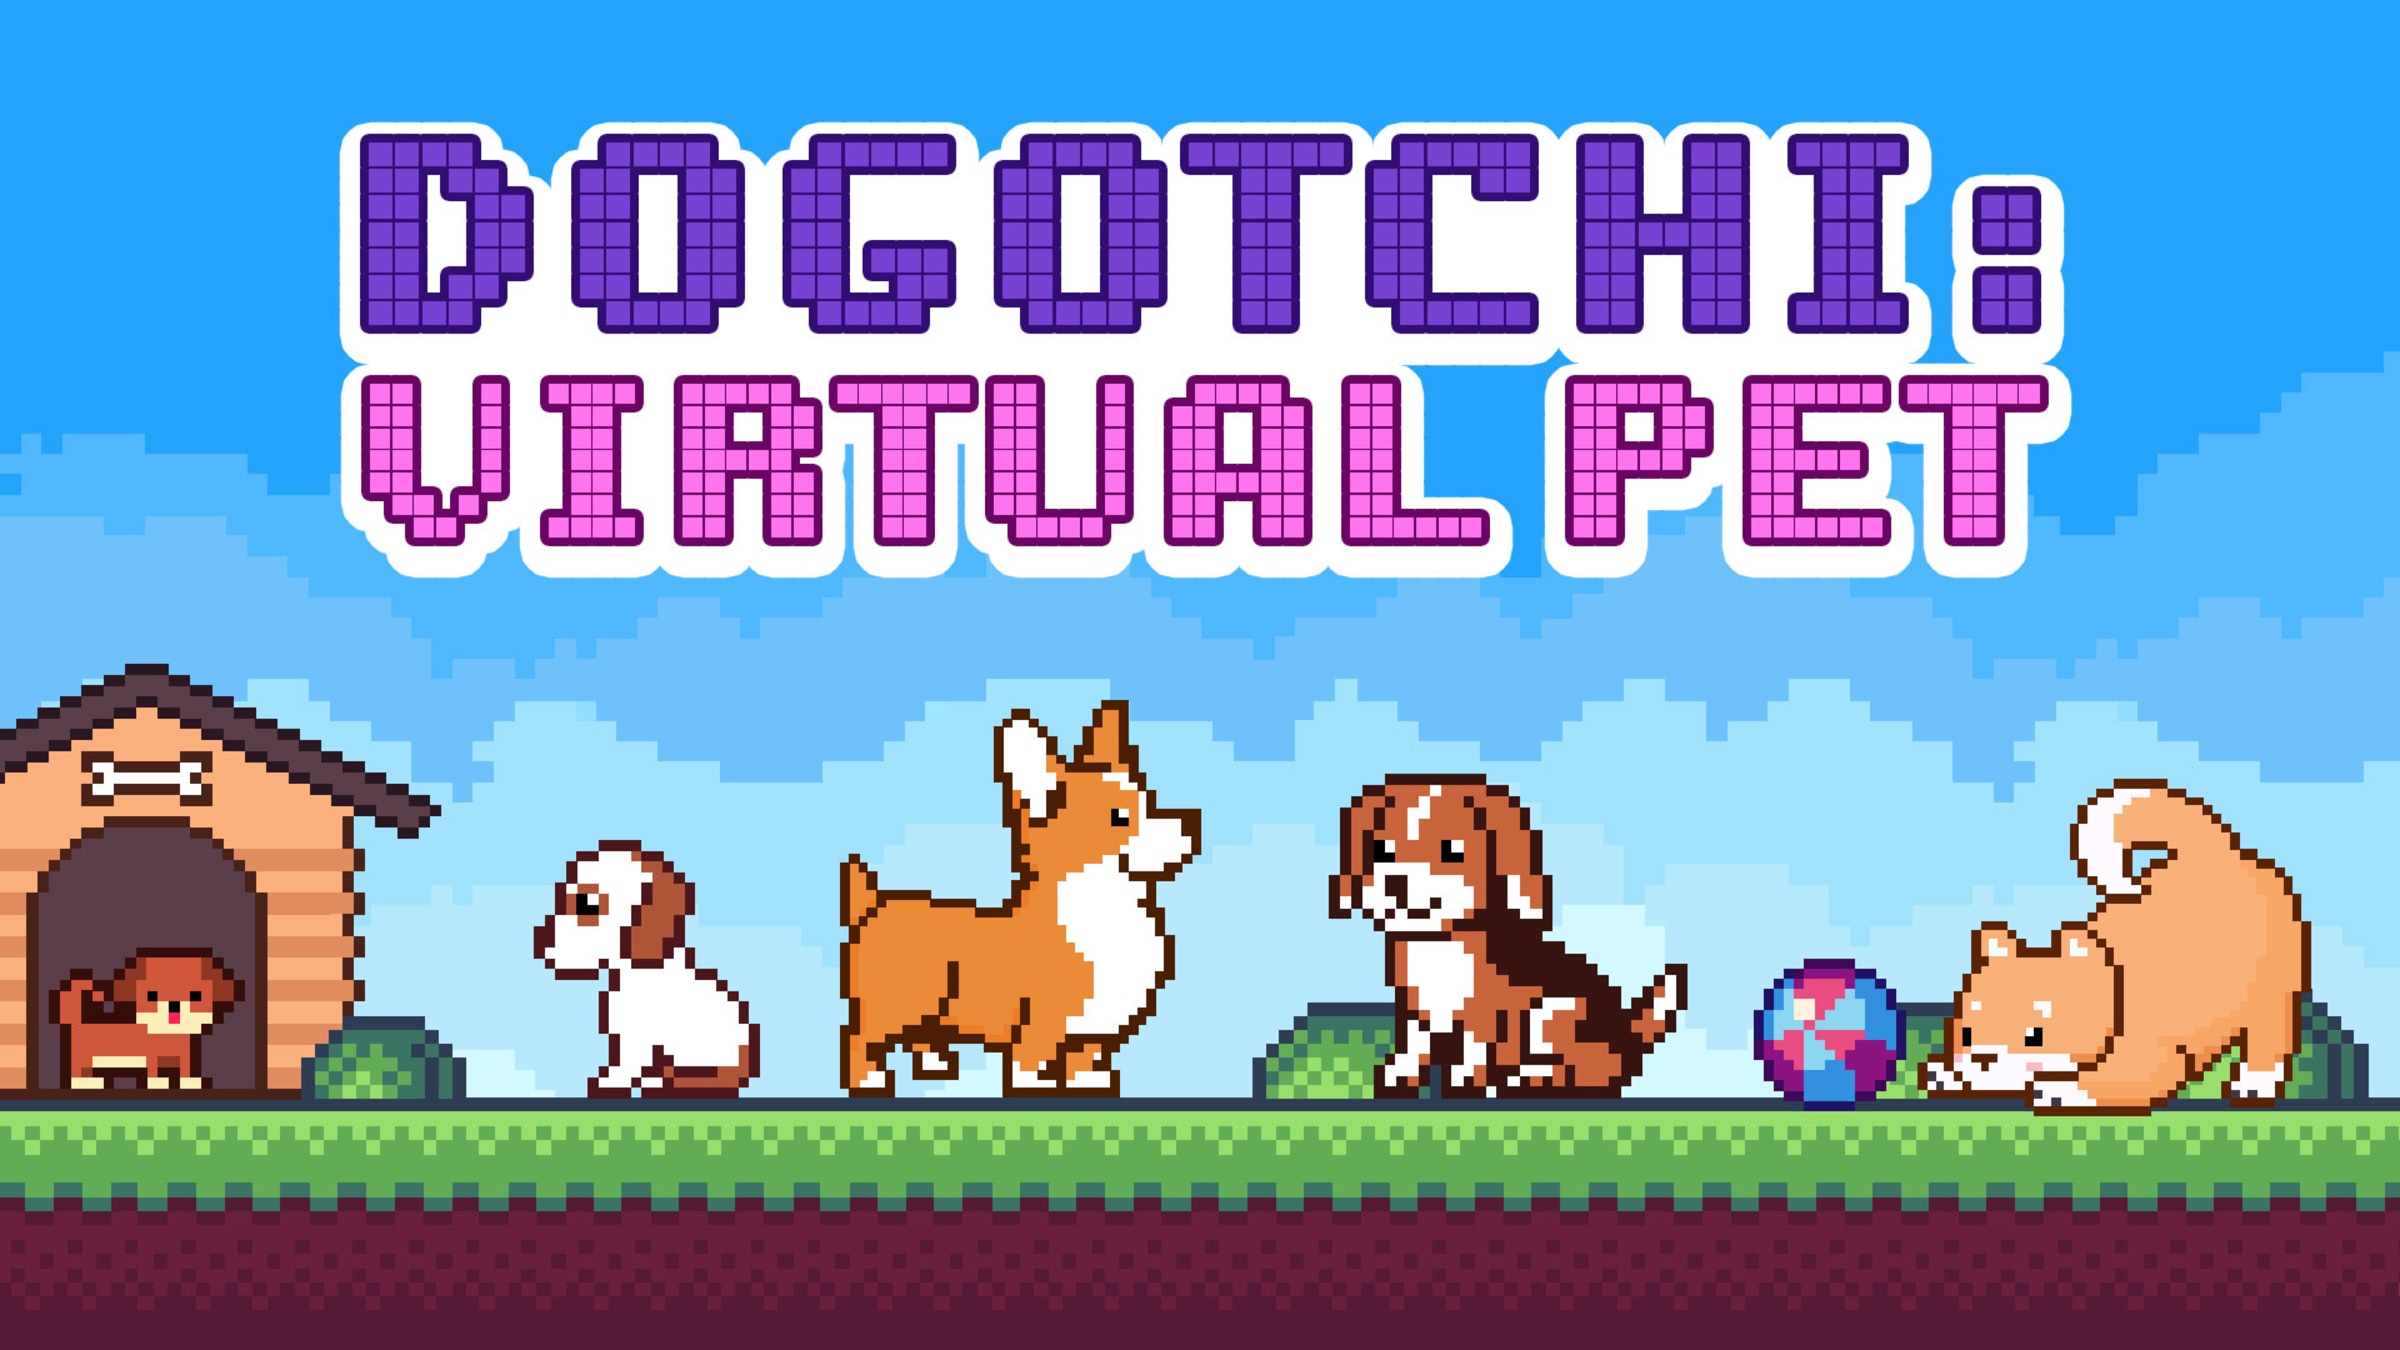 Virtual Pets Play Free Online Virtual Pet Games. Virtual Pets Game Downloads